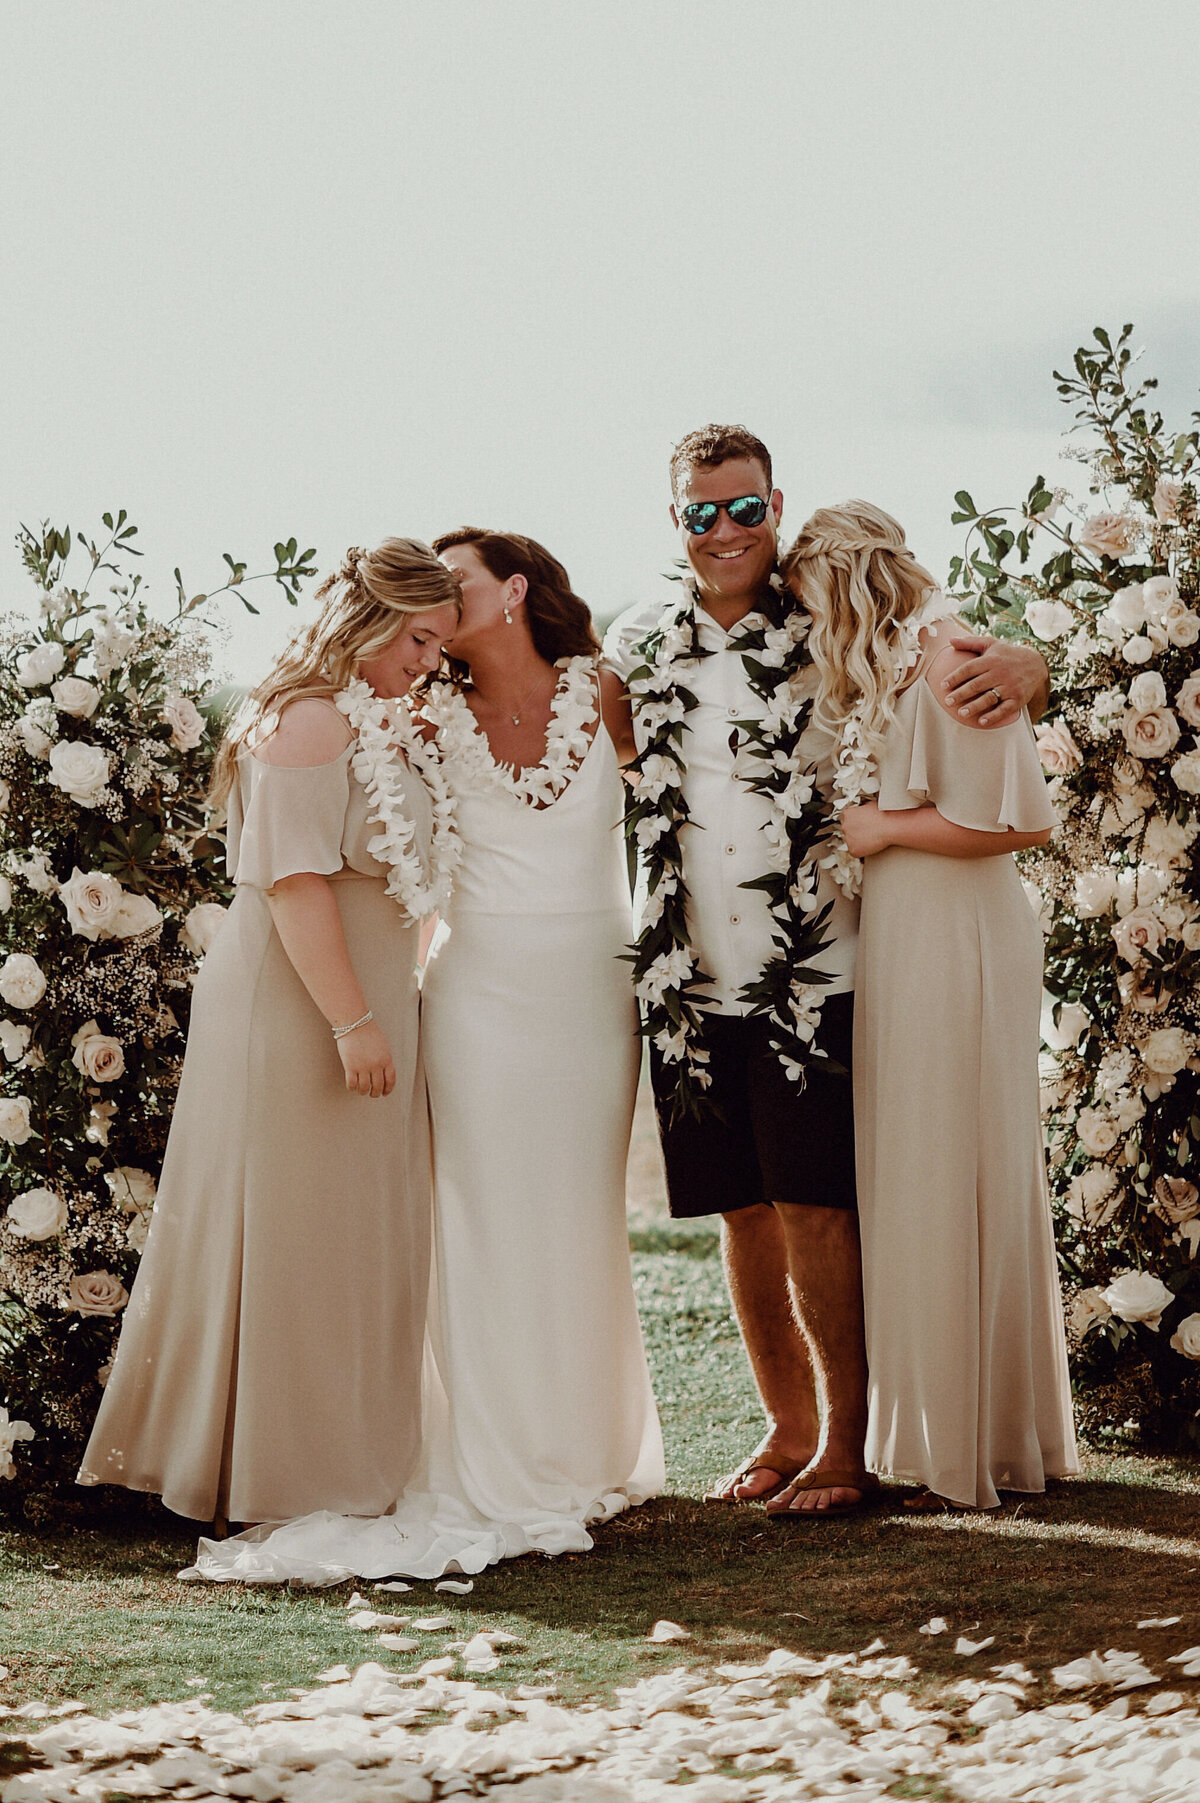 Maui Love Weddings and Events Maui Hawaii Full Service Wedding Planning Coordinating Event Design Company Destination Wedding 17